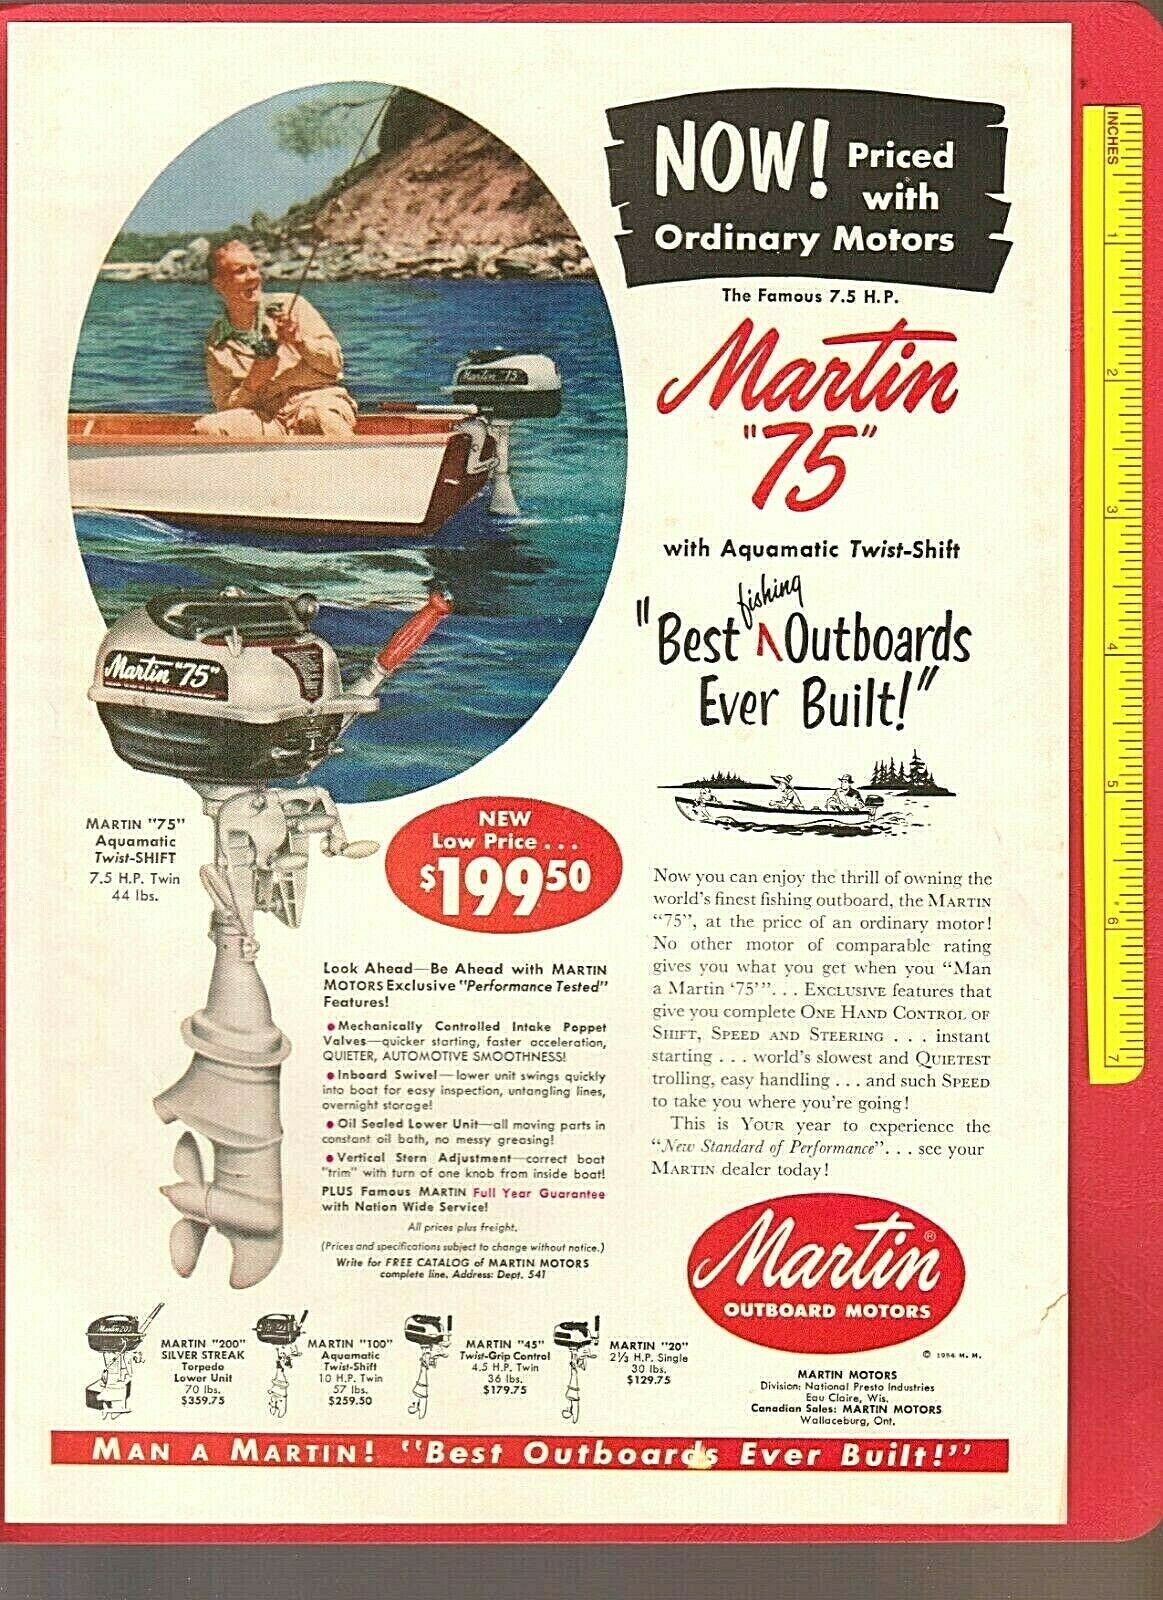 Vintage Original 1954 Martin "75" Outboard Fishing Motors Color Action Ad